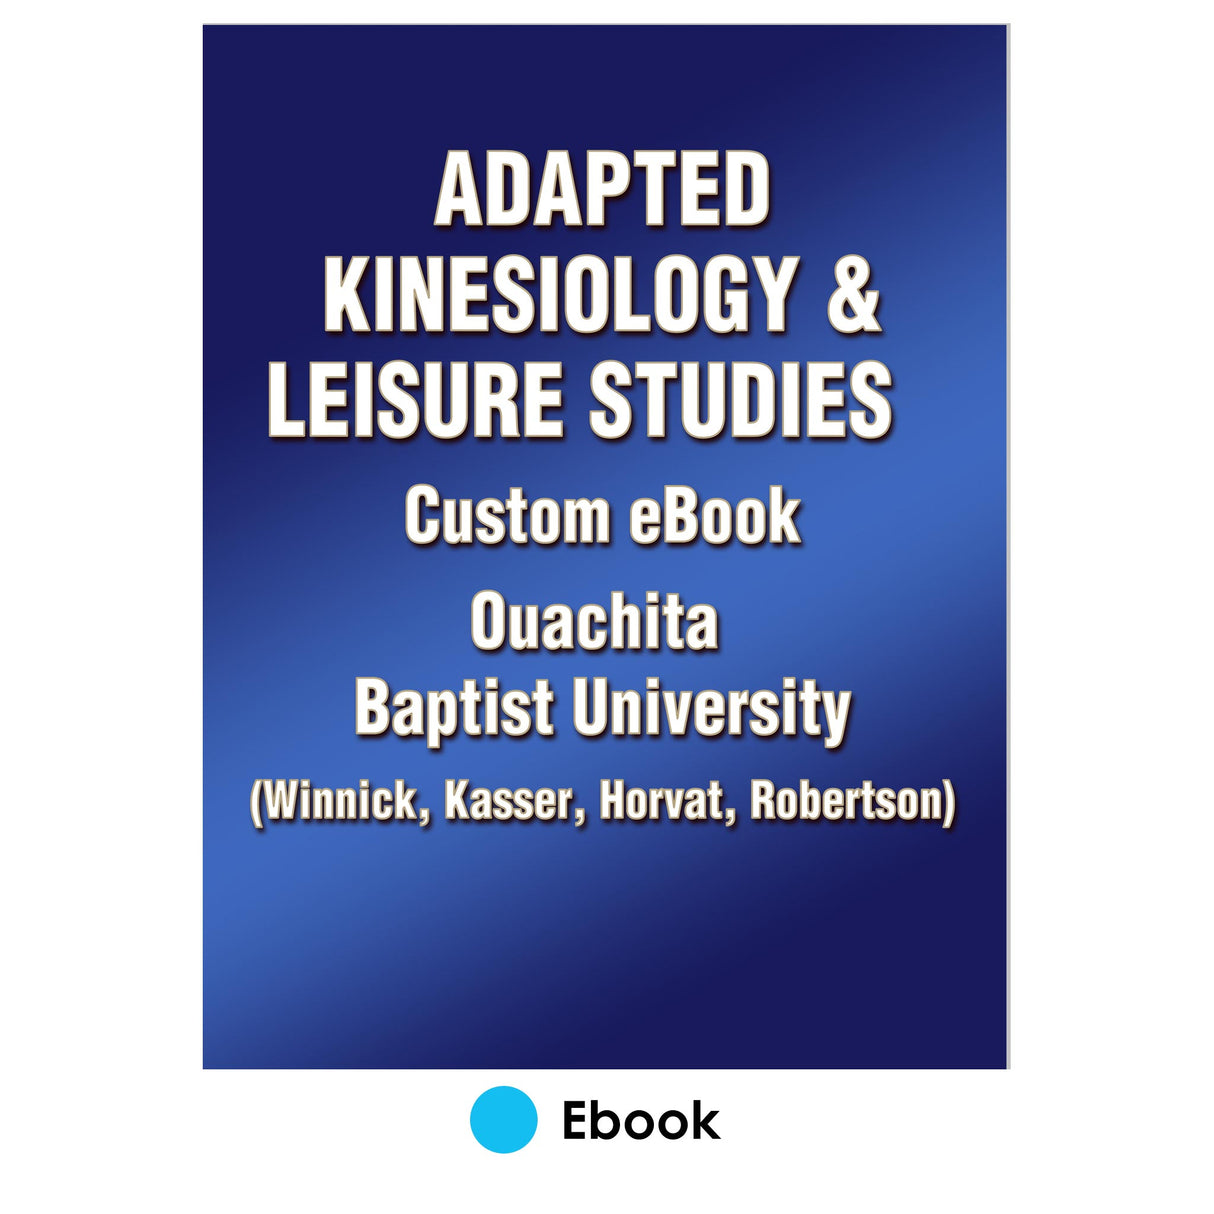 Adapted Kinesiology & Leisure Studies Custom eBook: Ouachita Baptist University (Winnick, Kasser, Horvat, Robertson)